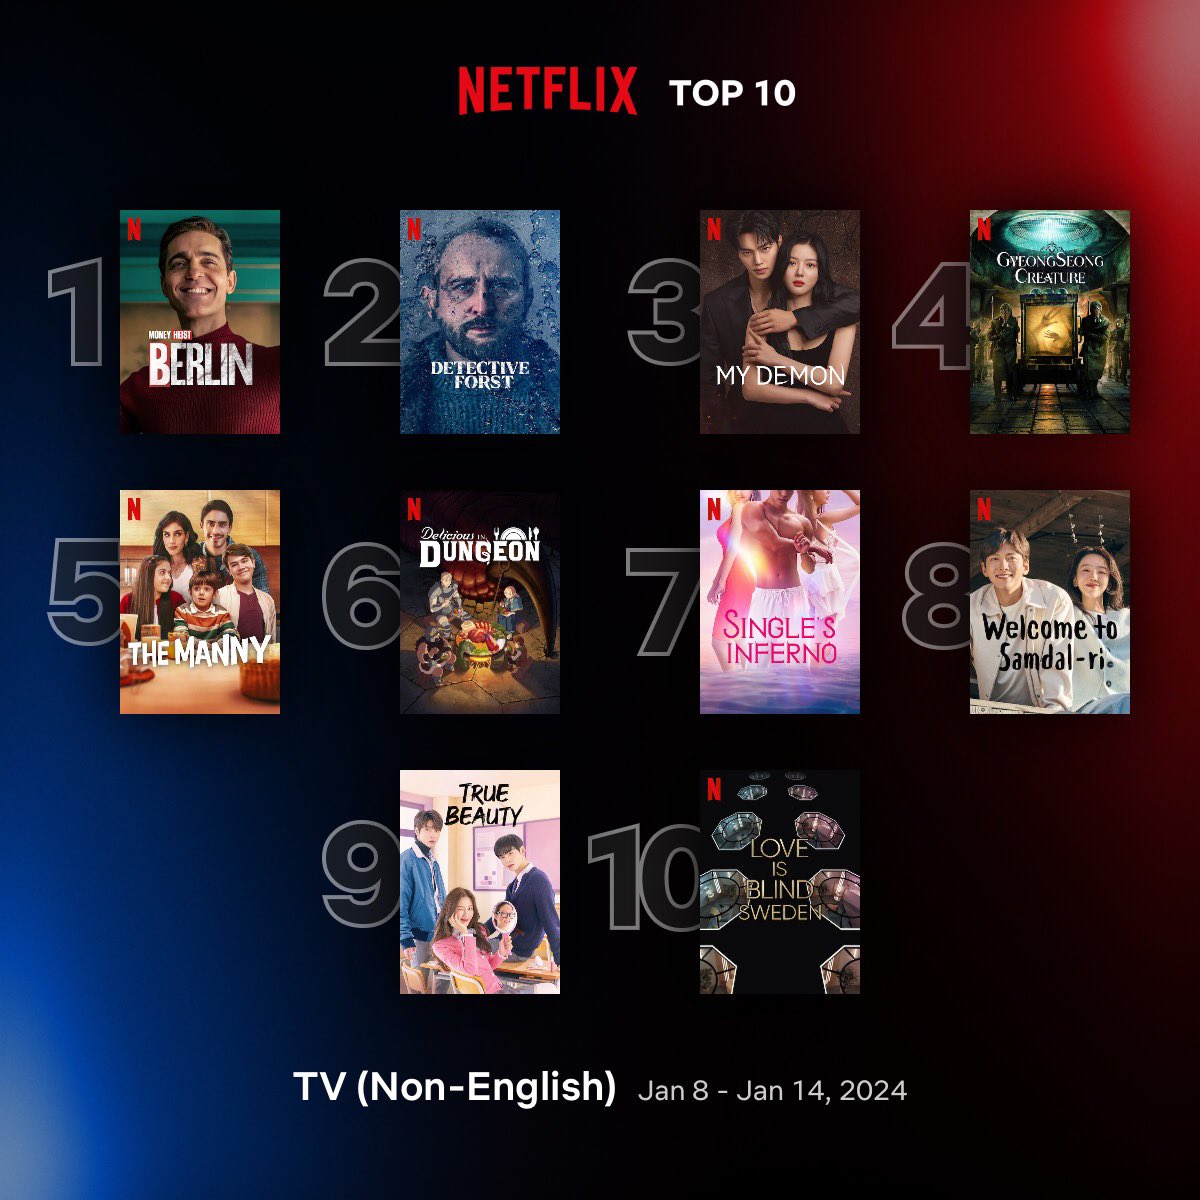 Global Top 10 Non-English TV Series on Netflix between 8 - 14 January

1. #Berlin 🇪🇸
2. #DetectiveForst 🇵🇱
3. #MyDemon 🇰🇷
4. #GyeongseongCreature 🇰🇷
5. #TheManny 🇲🇽
6. #DeliciousInDungeon 🇯🇵
7. #SinglesInferno: S3 🇰🇷
8. #WelcomeToSamdalri 🇰🇷
9. #TrueBeauty 🇰🇷
10. #LoveIsBlind: